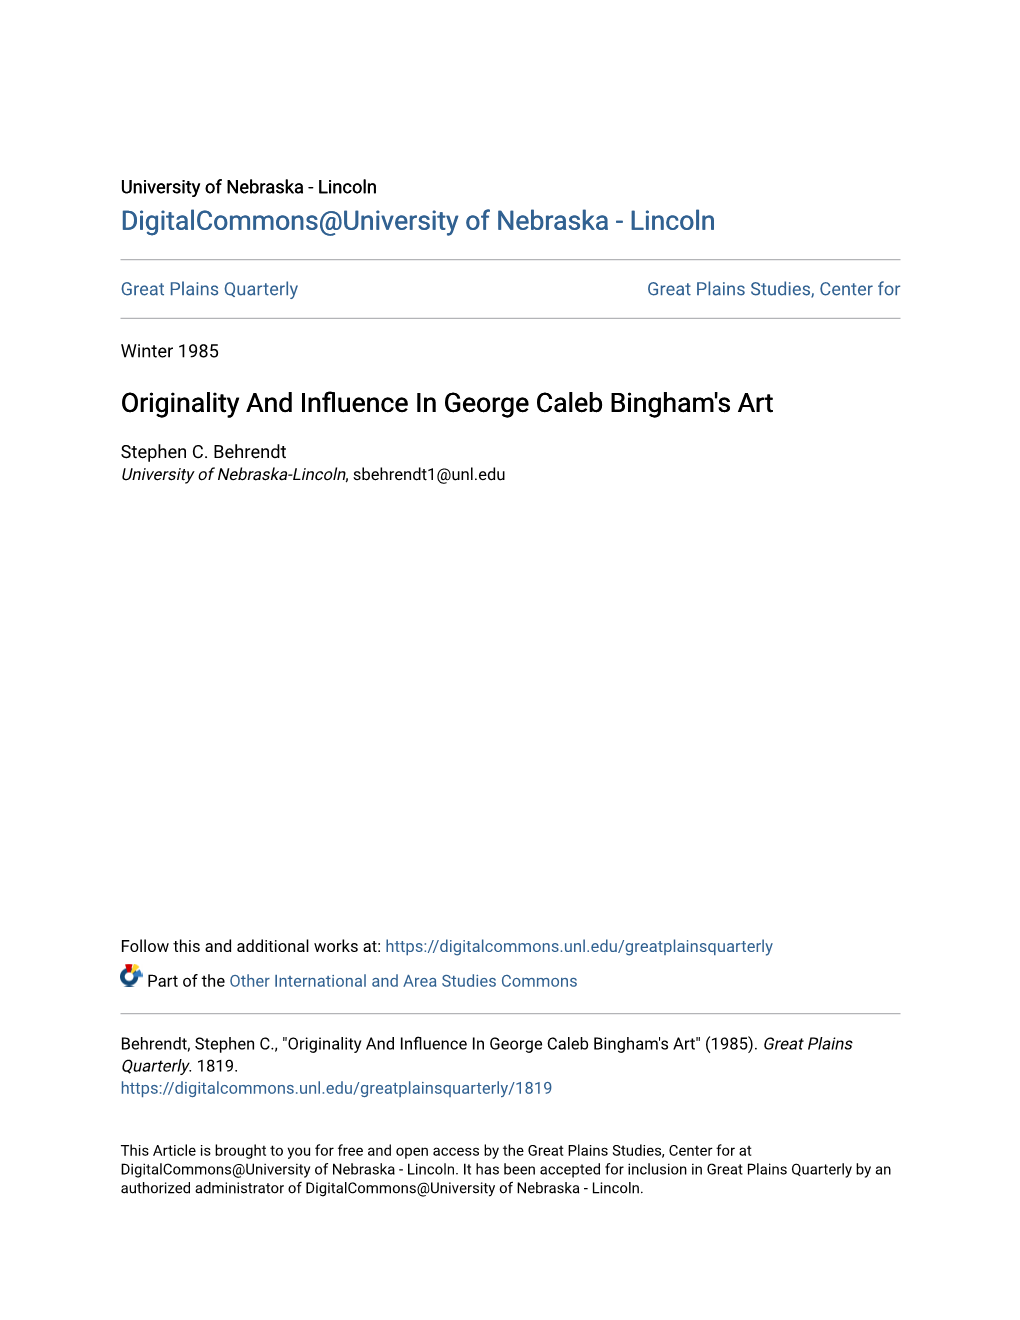 Originality and Influence in George Caleb Bingham's Art